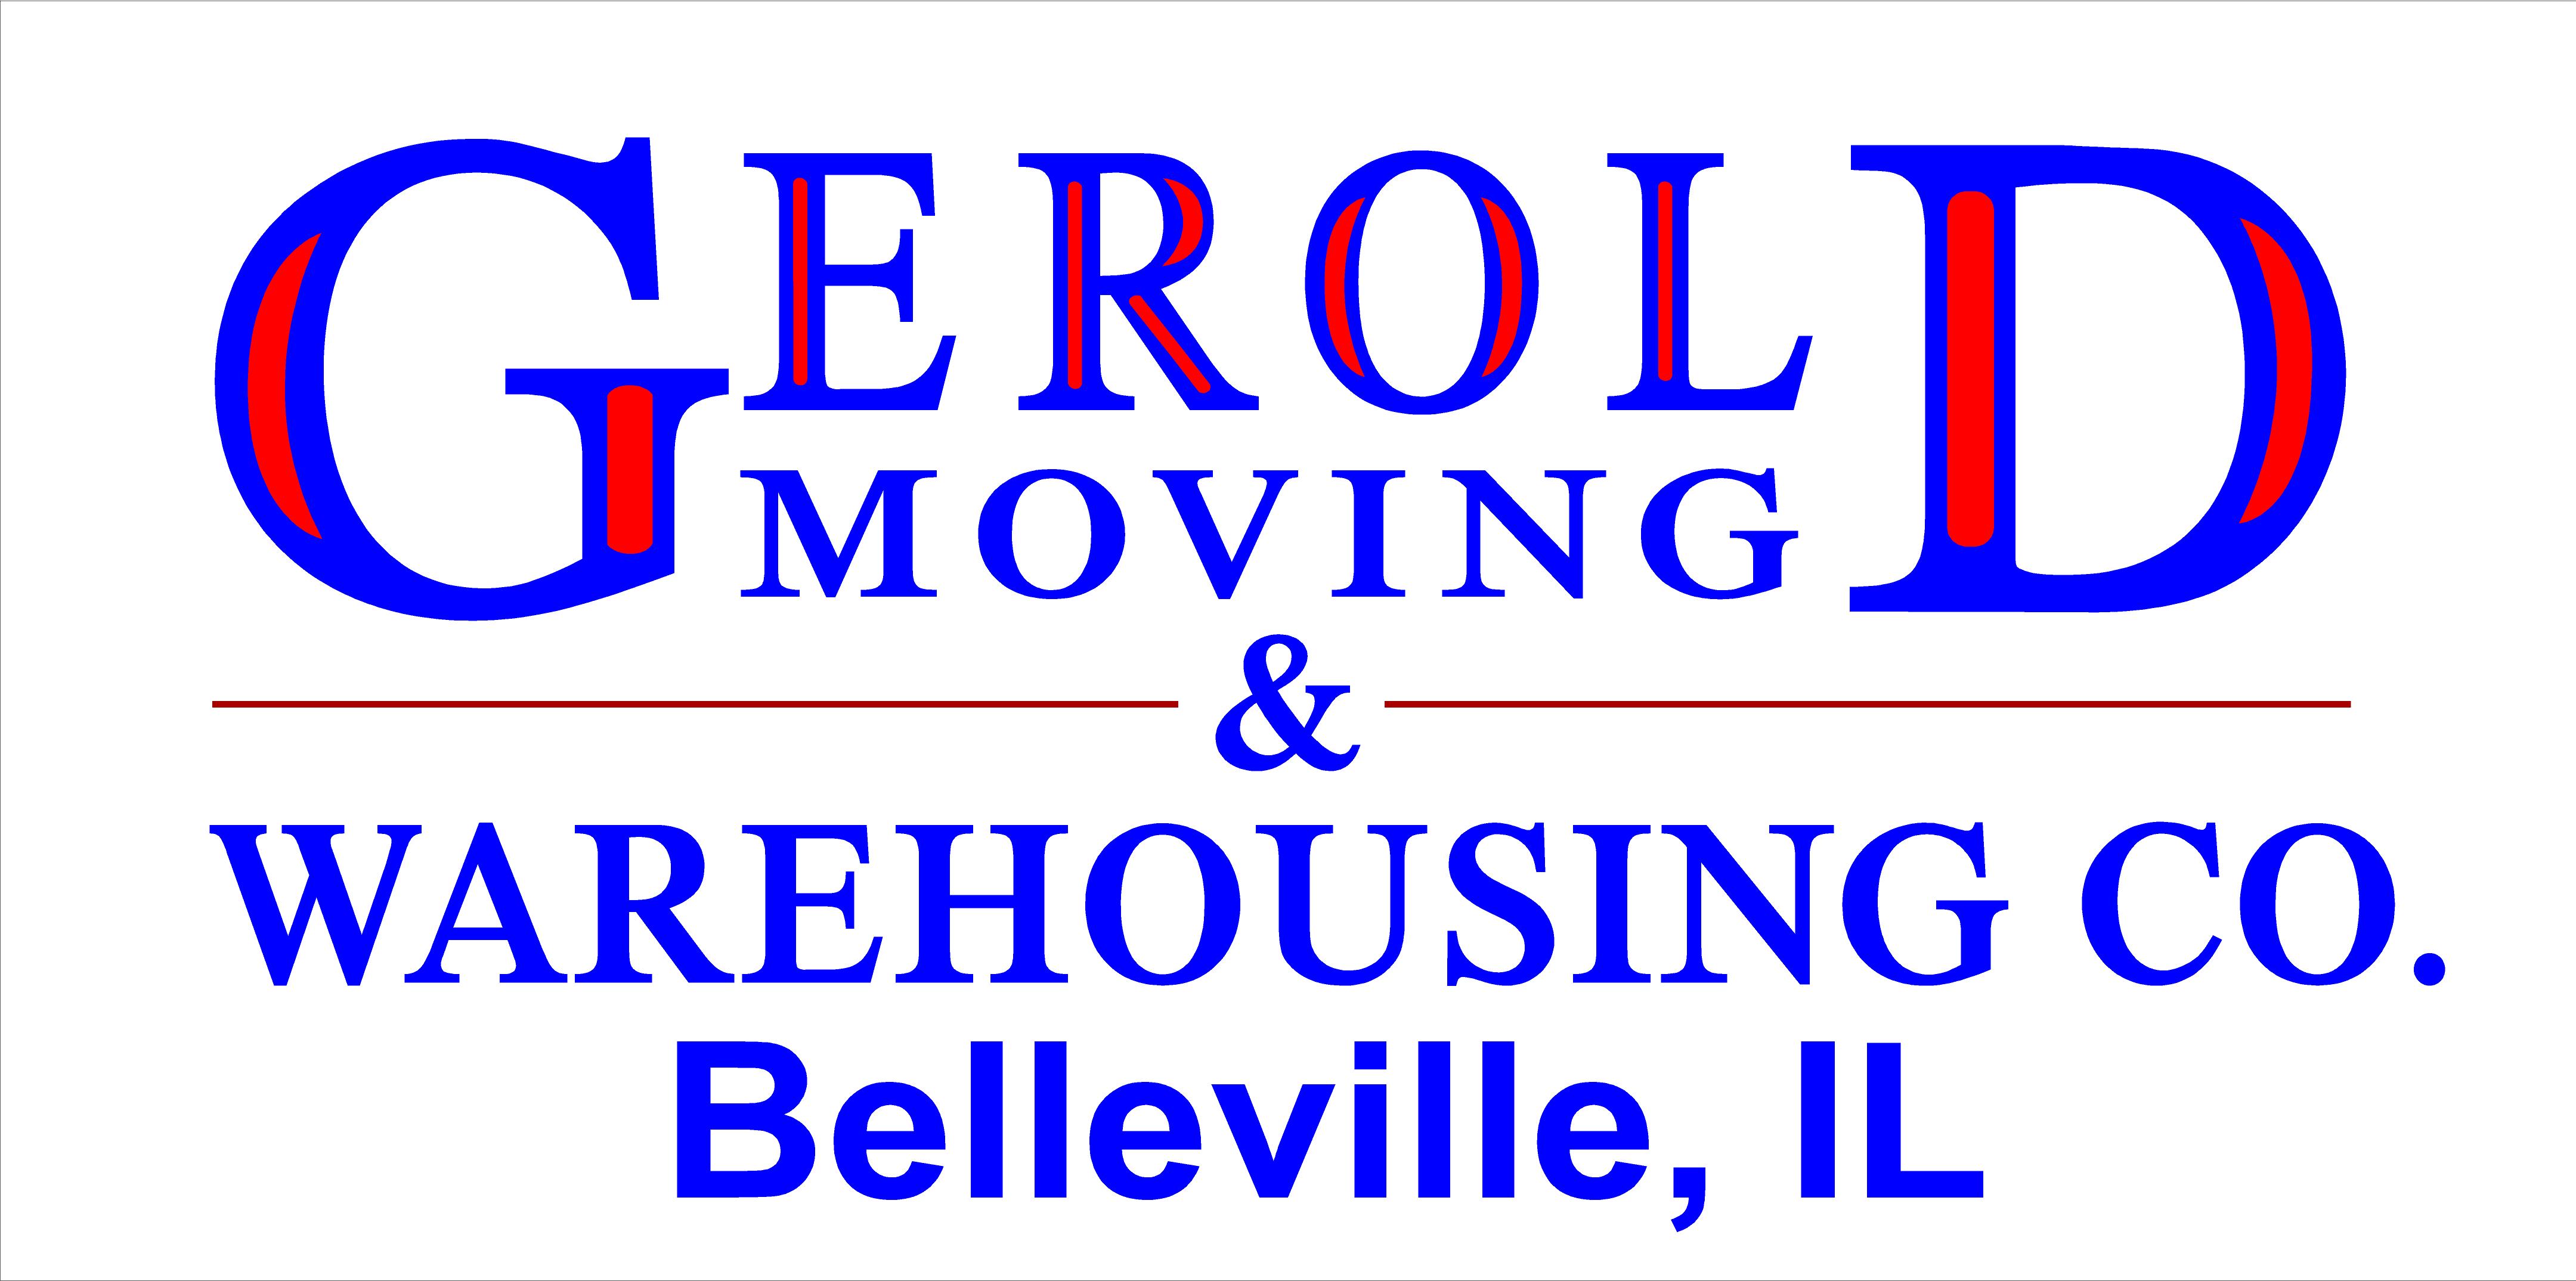 Gerold Moving & Warehousing Company Logo